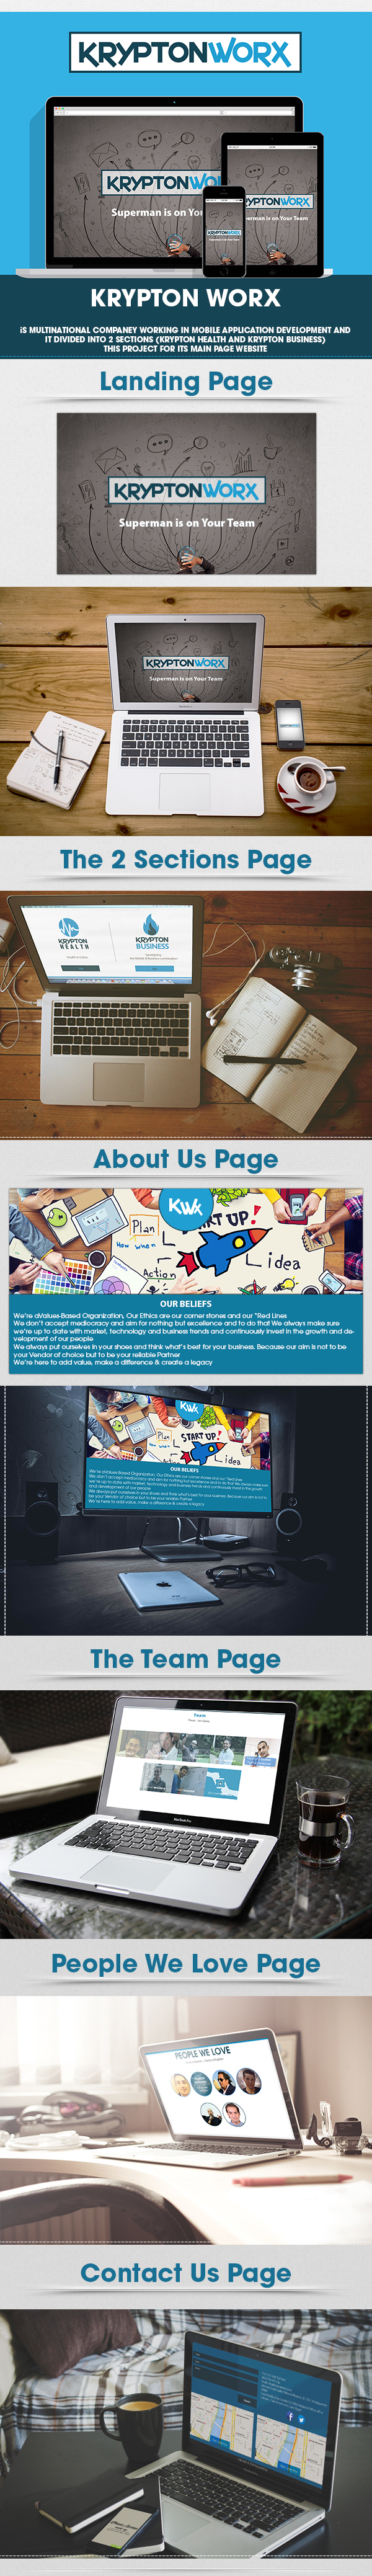 Web Website typo UI ux clorful creative blue great inspire